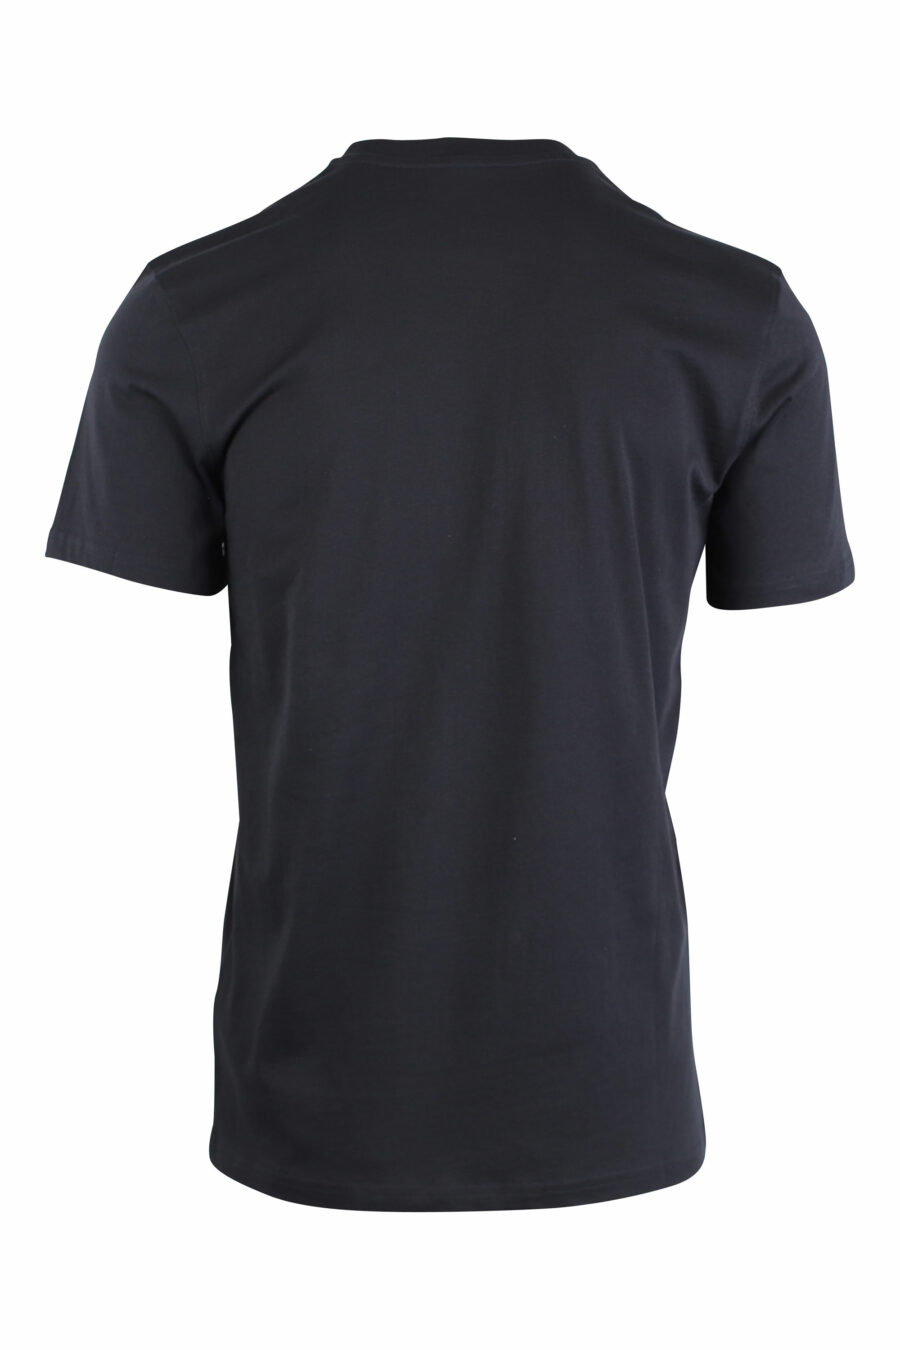 Camiseta negra con logo en franja blanco - IMG 1479